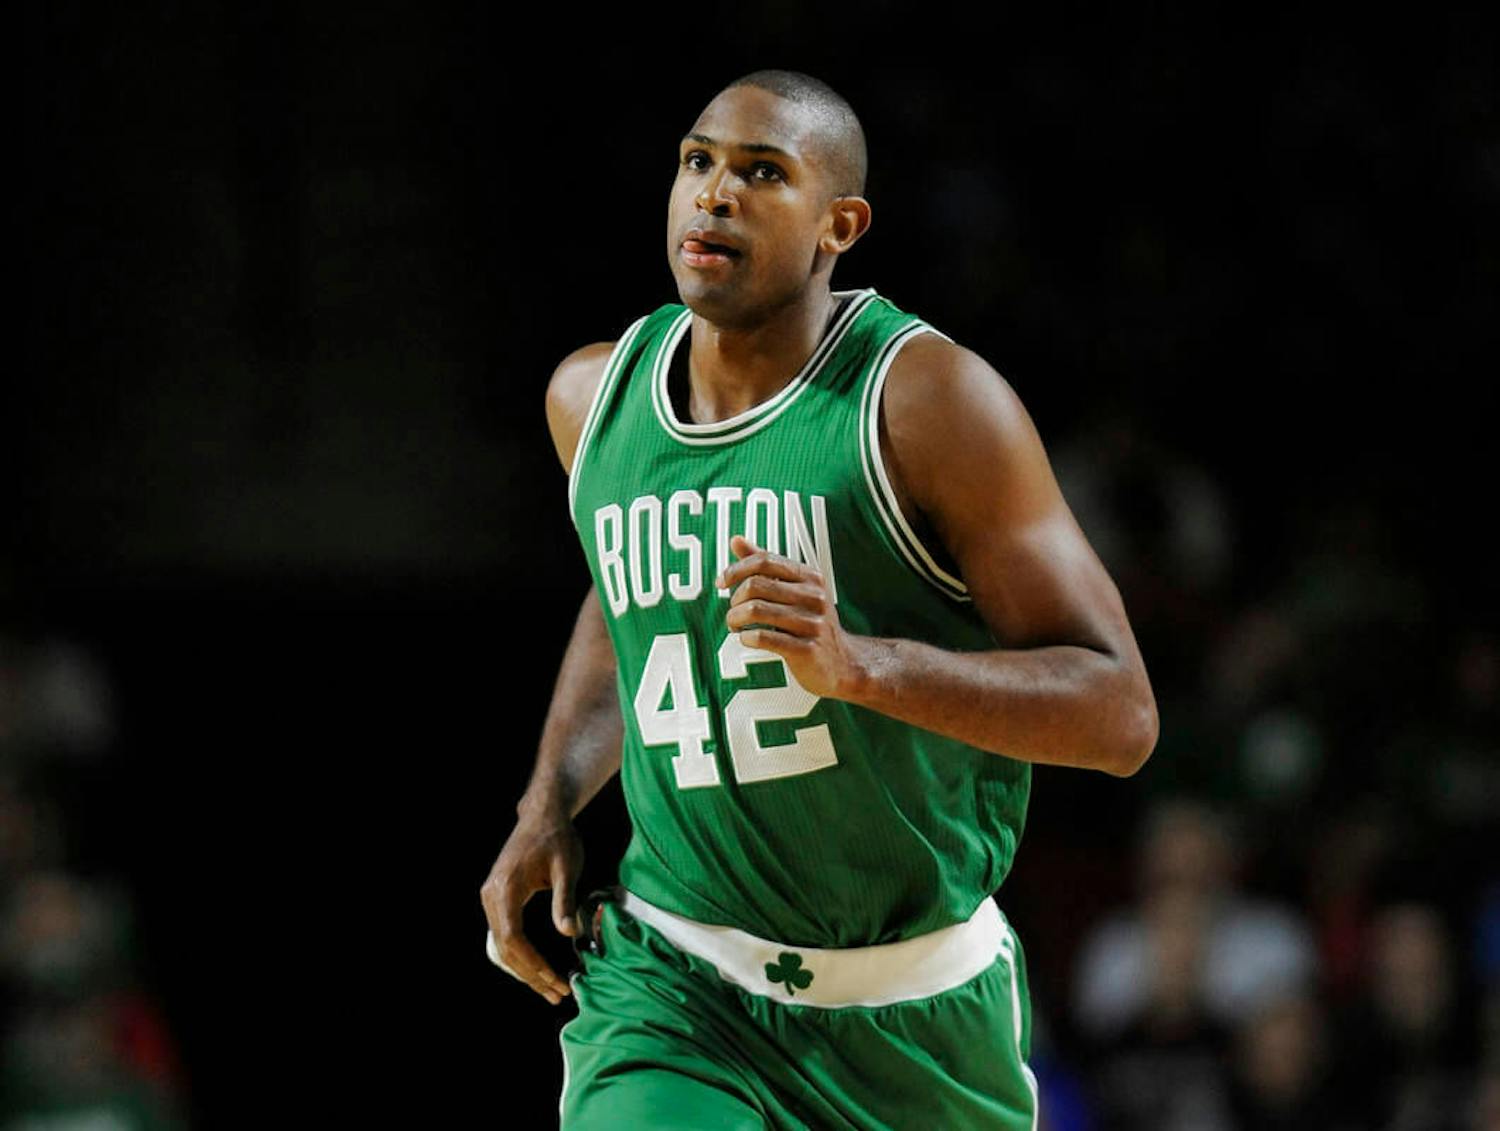 Boston Celtics forward Al Horford is averaging 13.5 points per game this season.